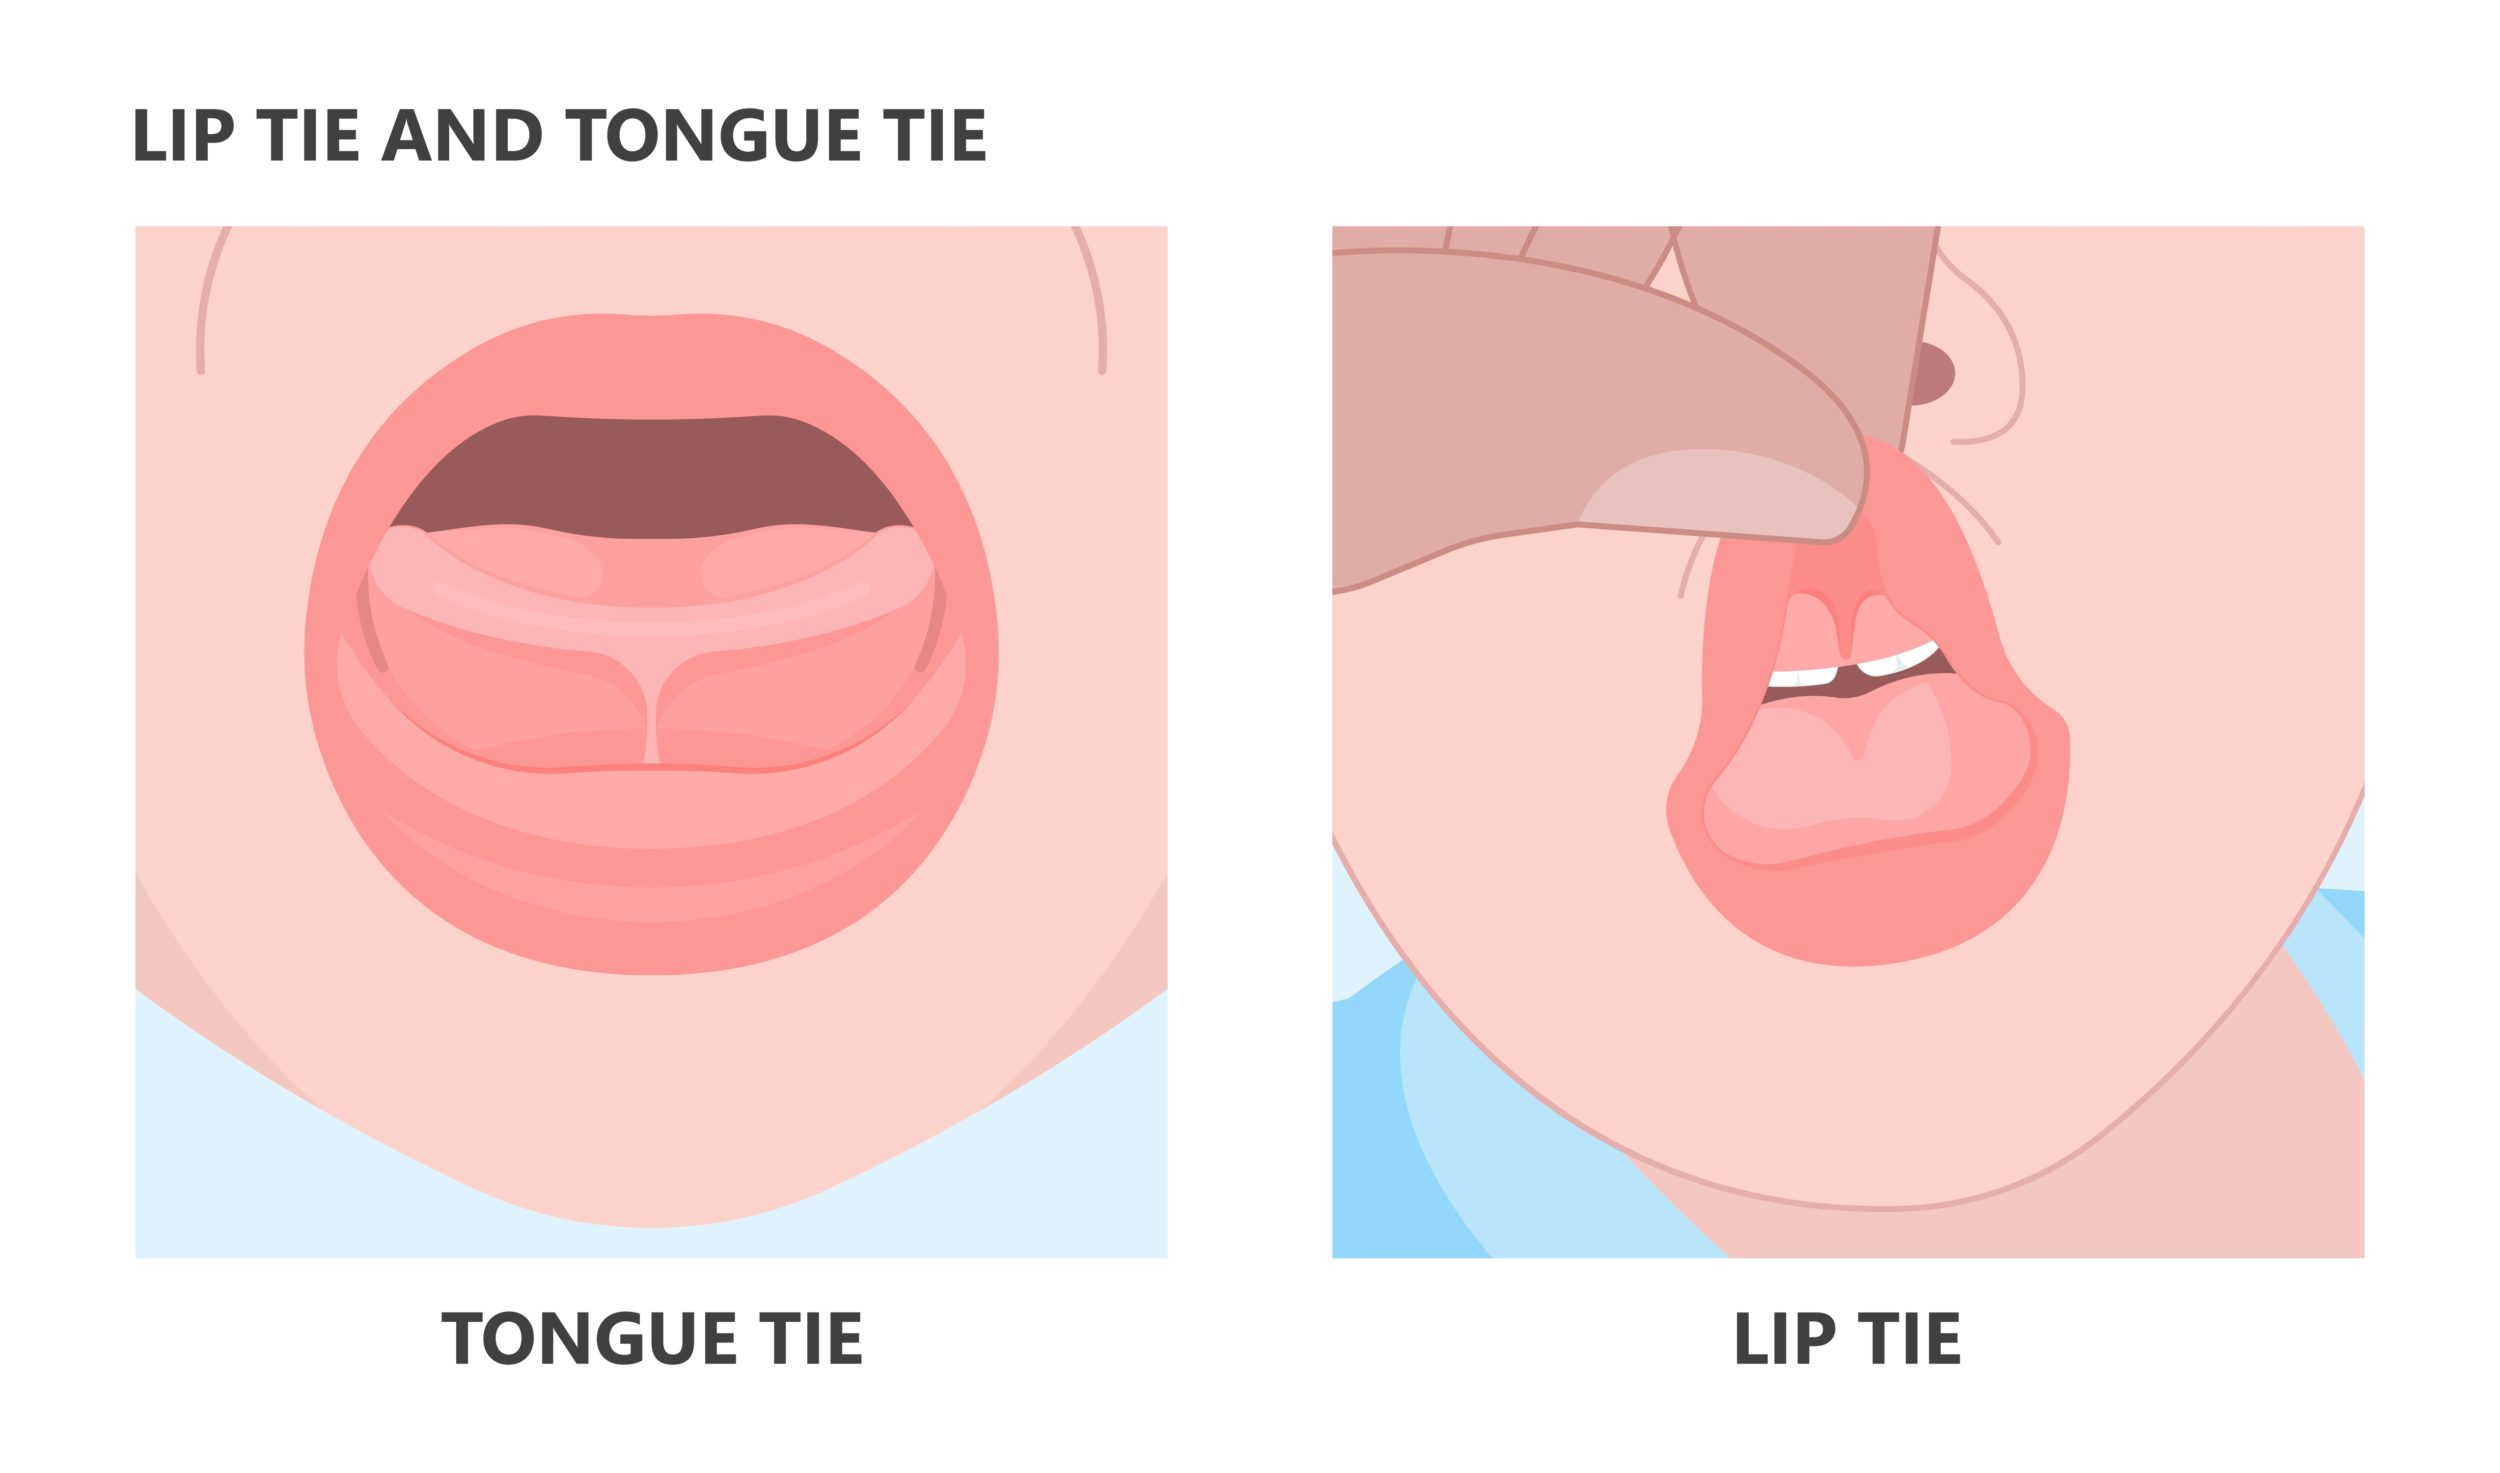 toungue-tie and lip-tie illustrations